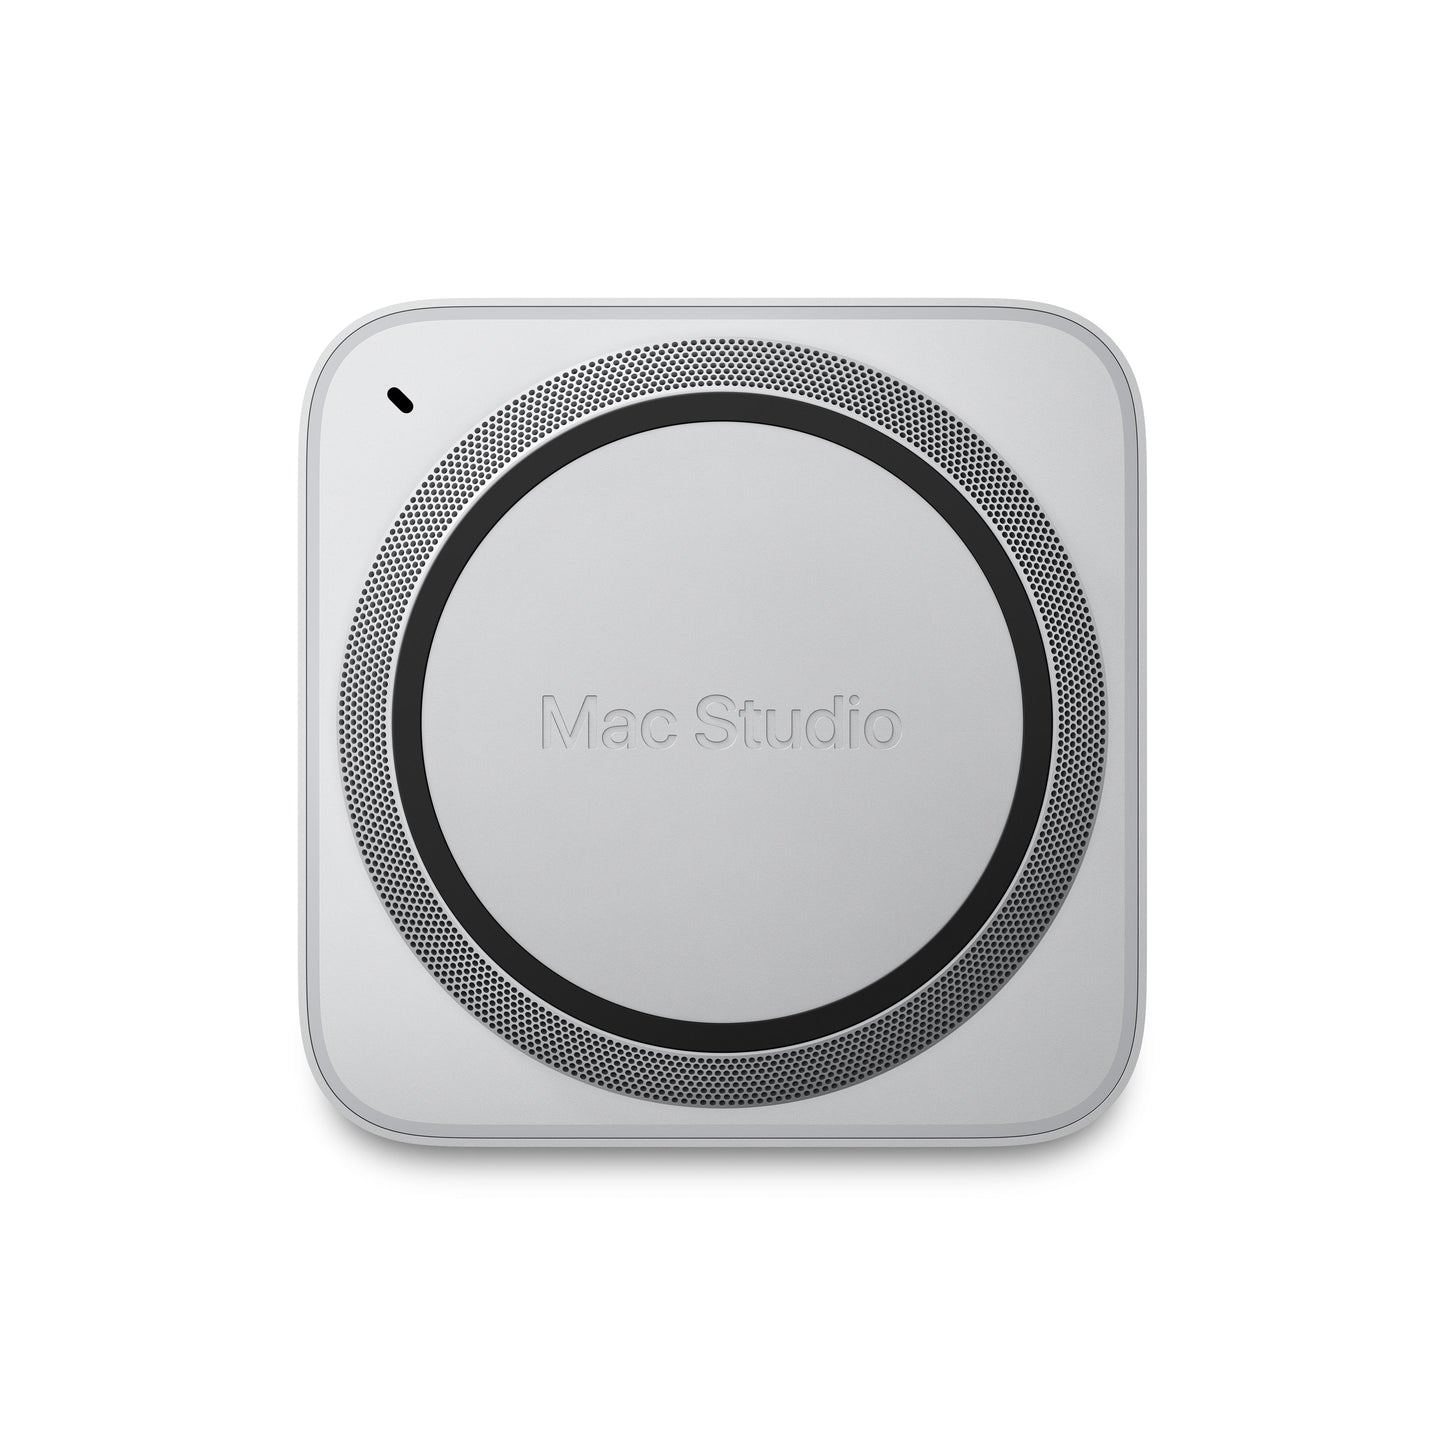 "Mac Studio: Apple M1 Max chip with 10 core CPU and 24_core GPU, 512GB SSD"